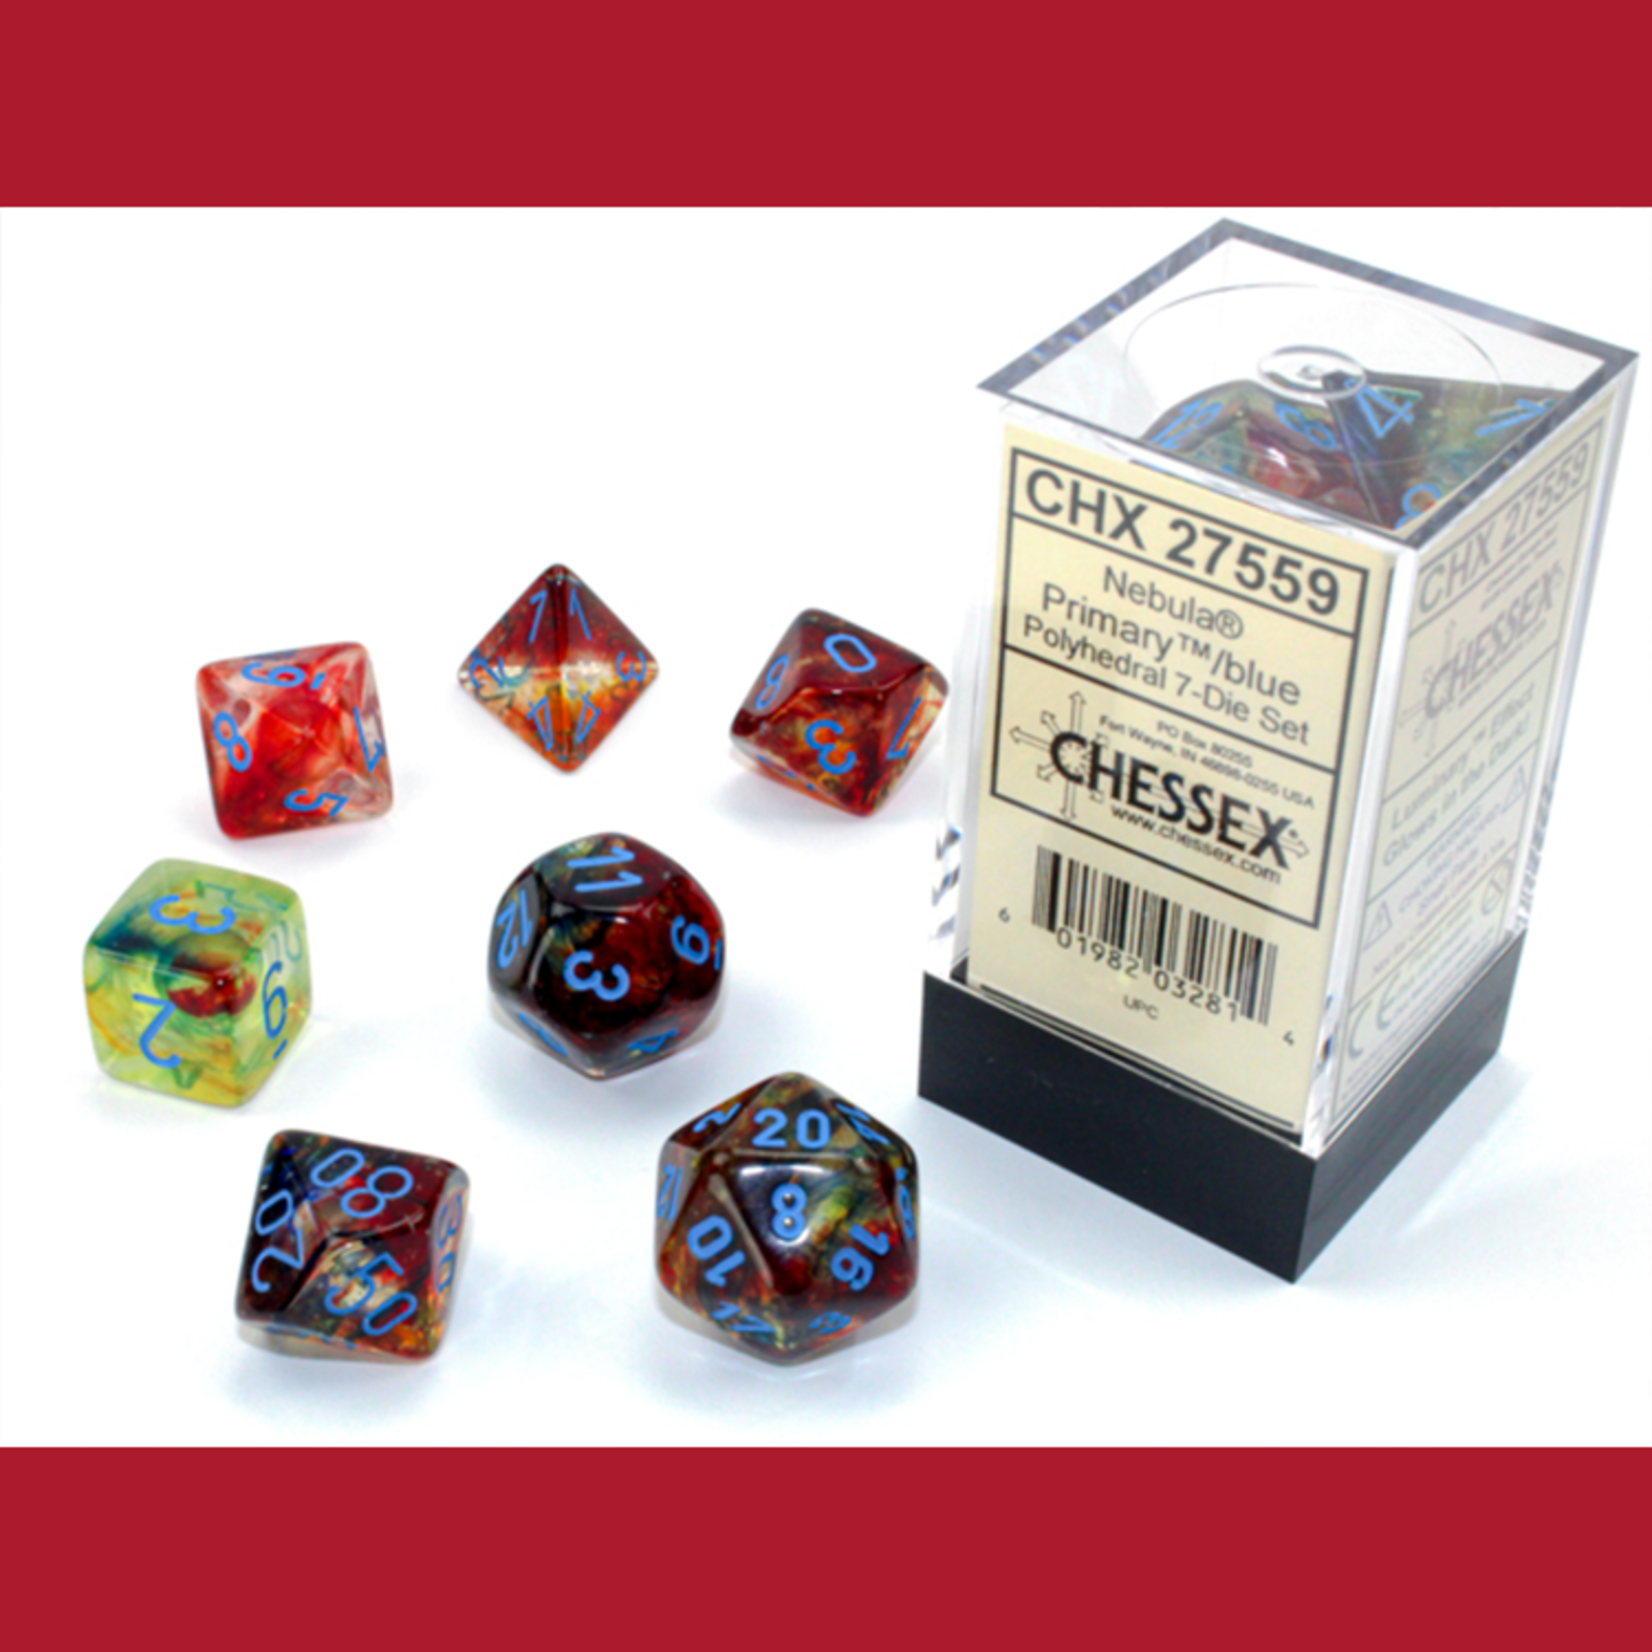 Chessex CHX 27559  Nebula Luminary Primary/Blue Polyhedral 7-die Set